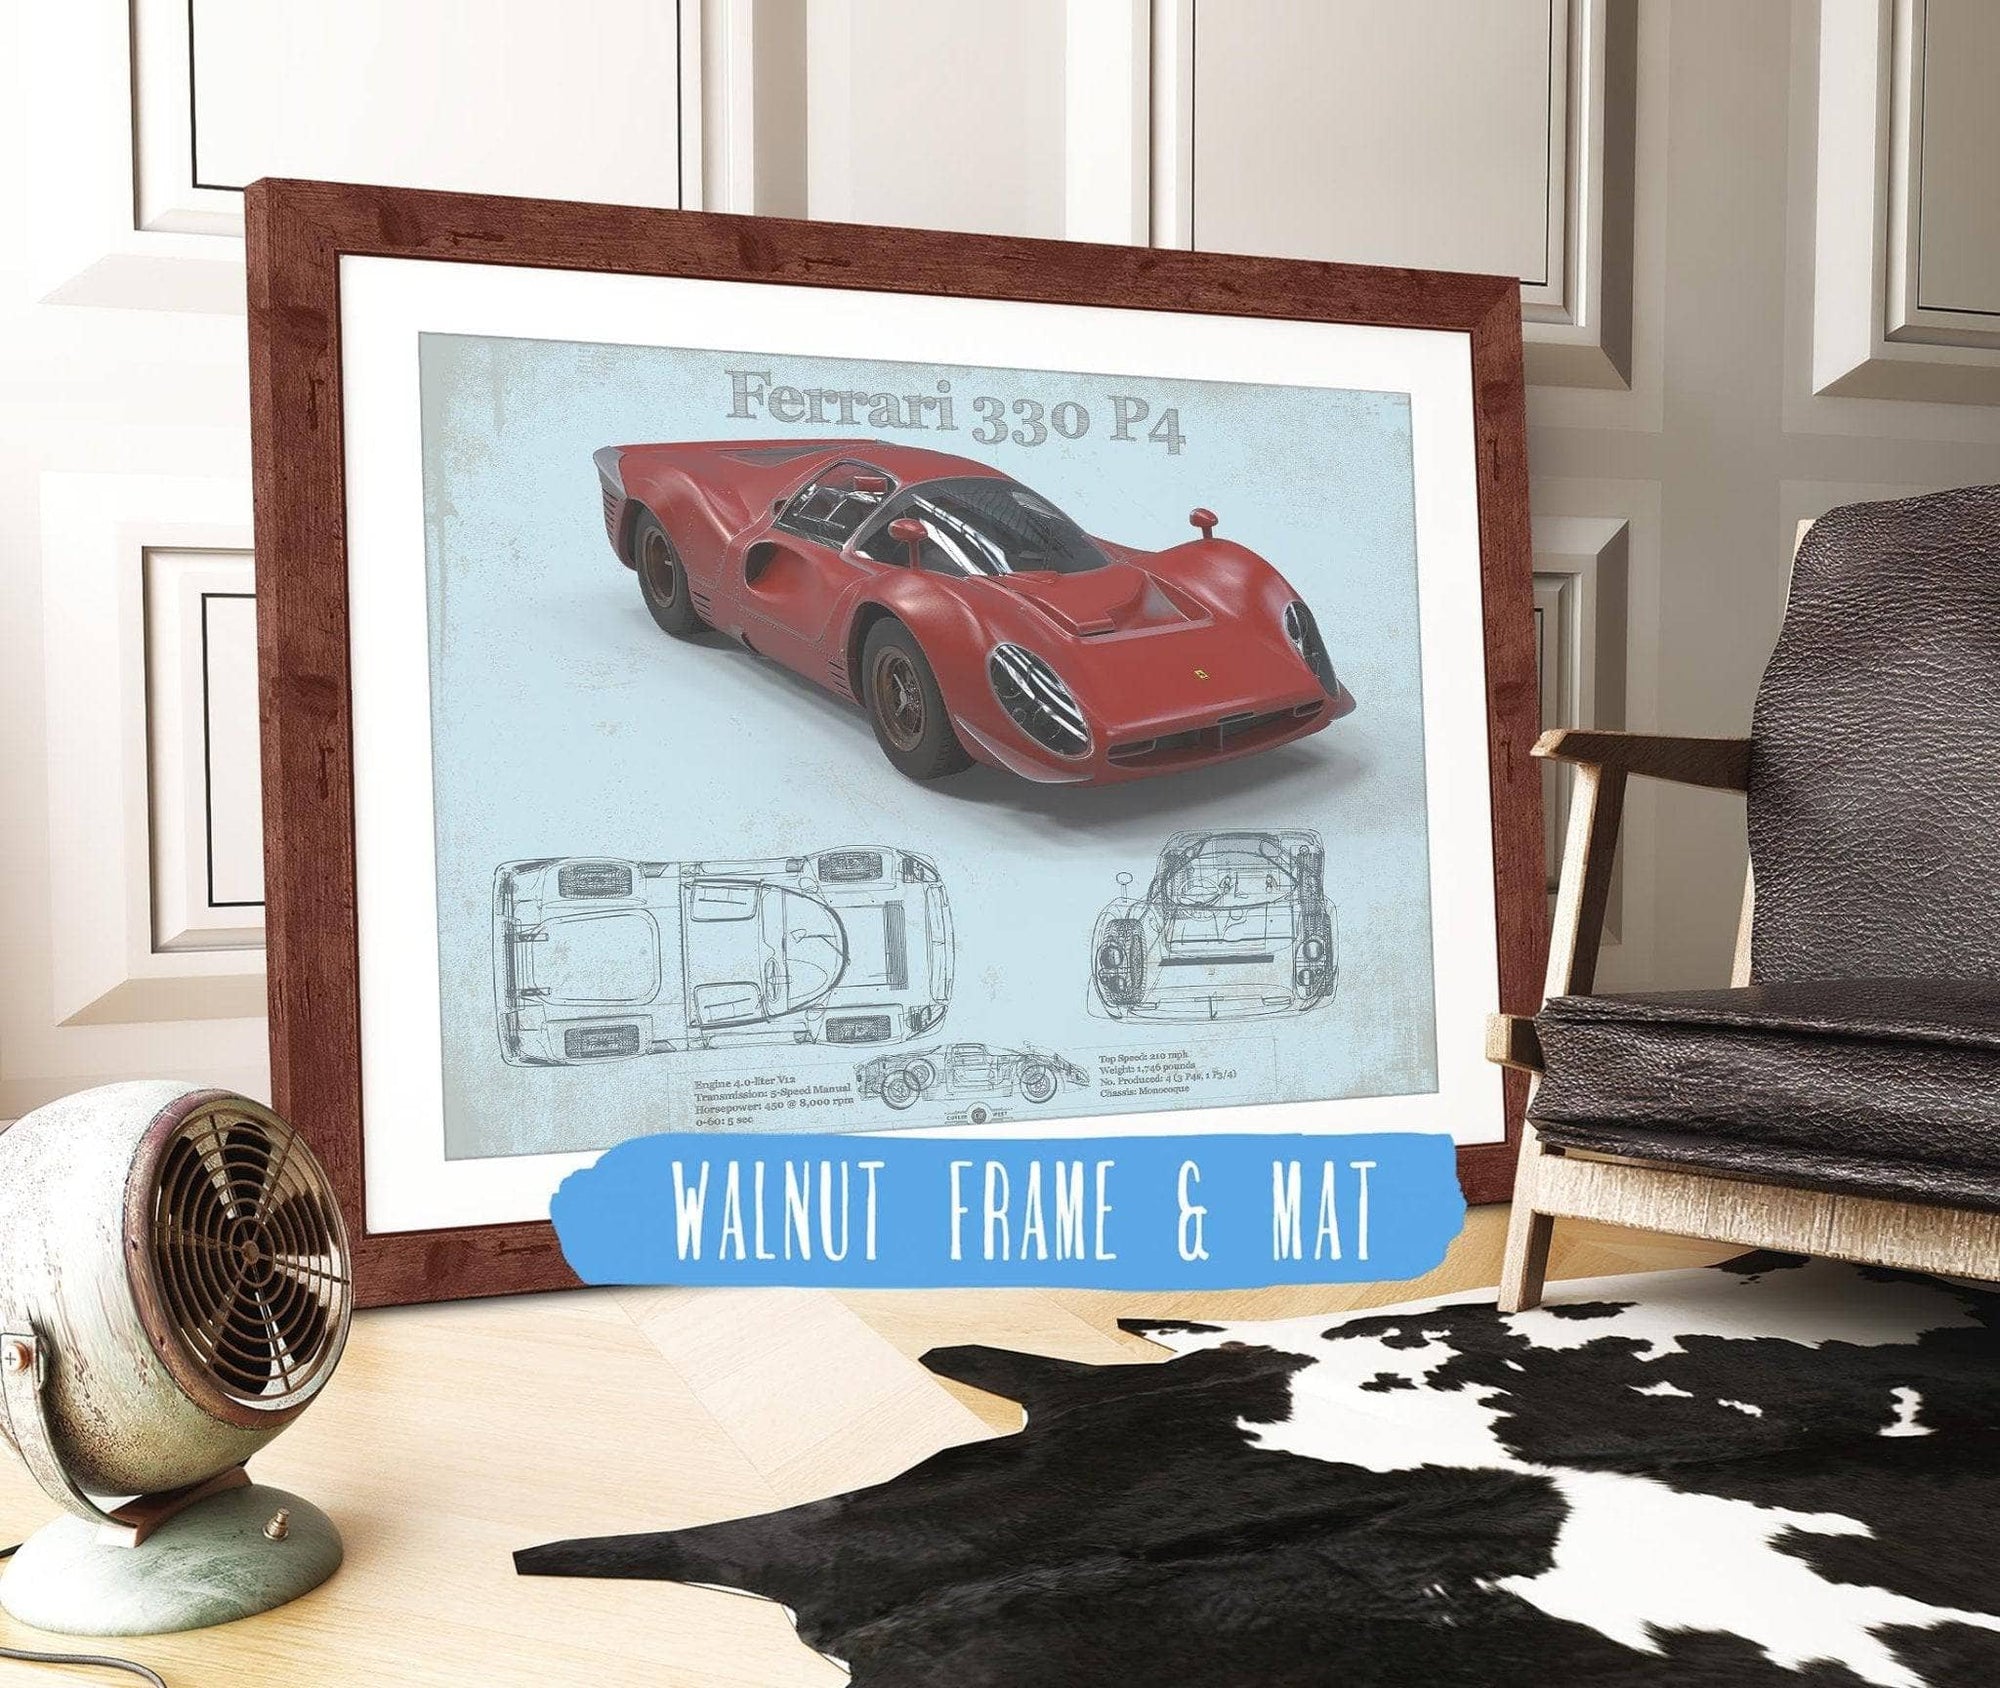 Cutler West Ferrari Collection 14" x 11" / Walnut Frame & Mat Ferrari 330 P4 Vintage Sports Car Print 845000143_61743